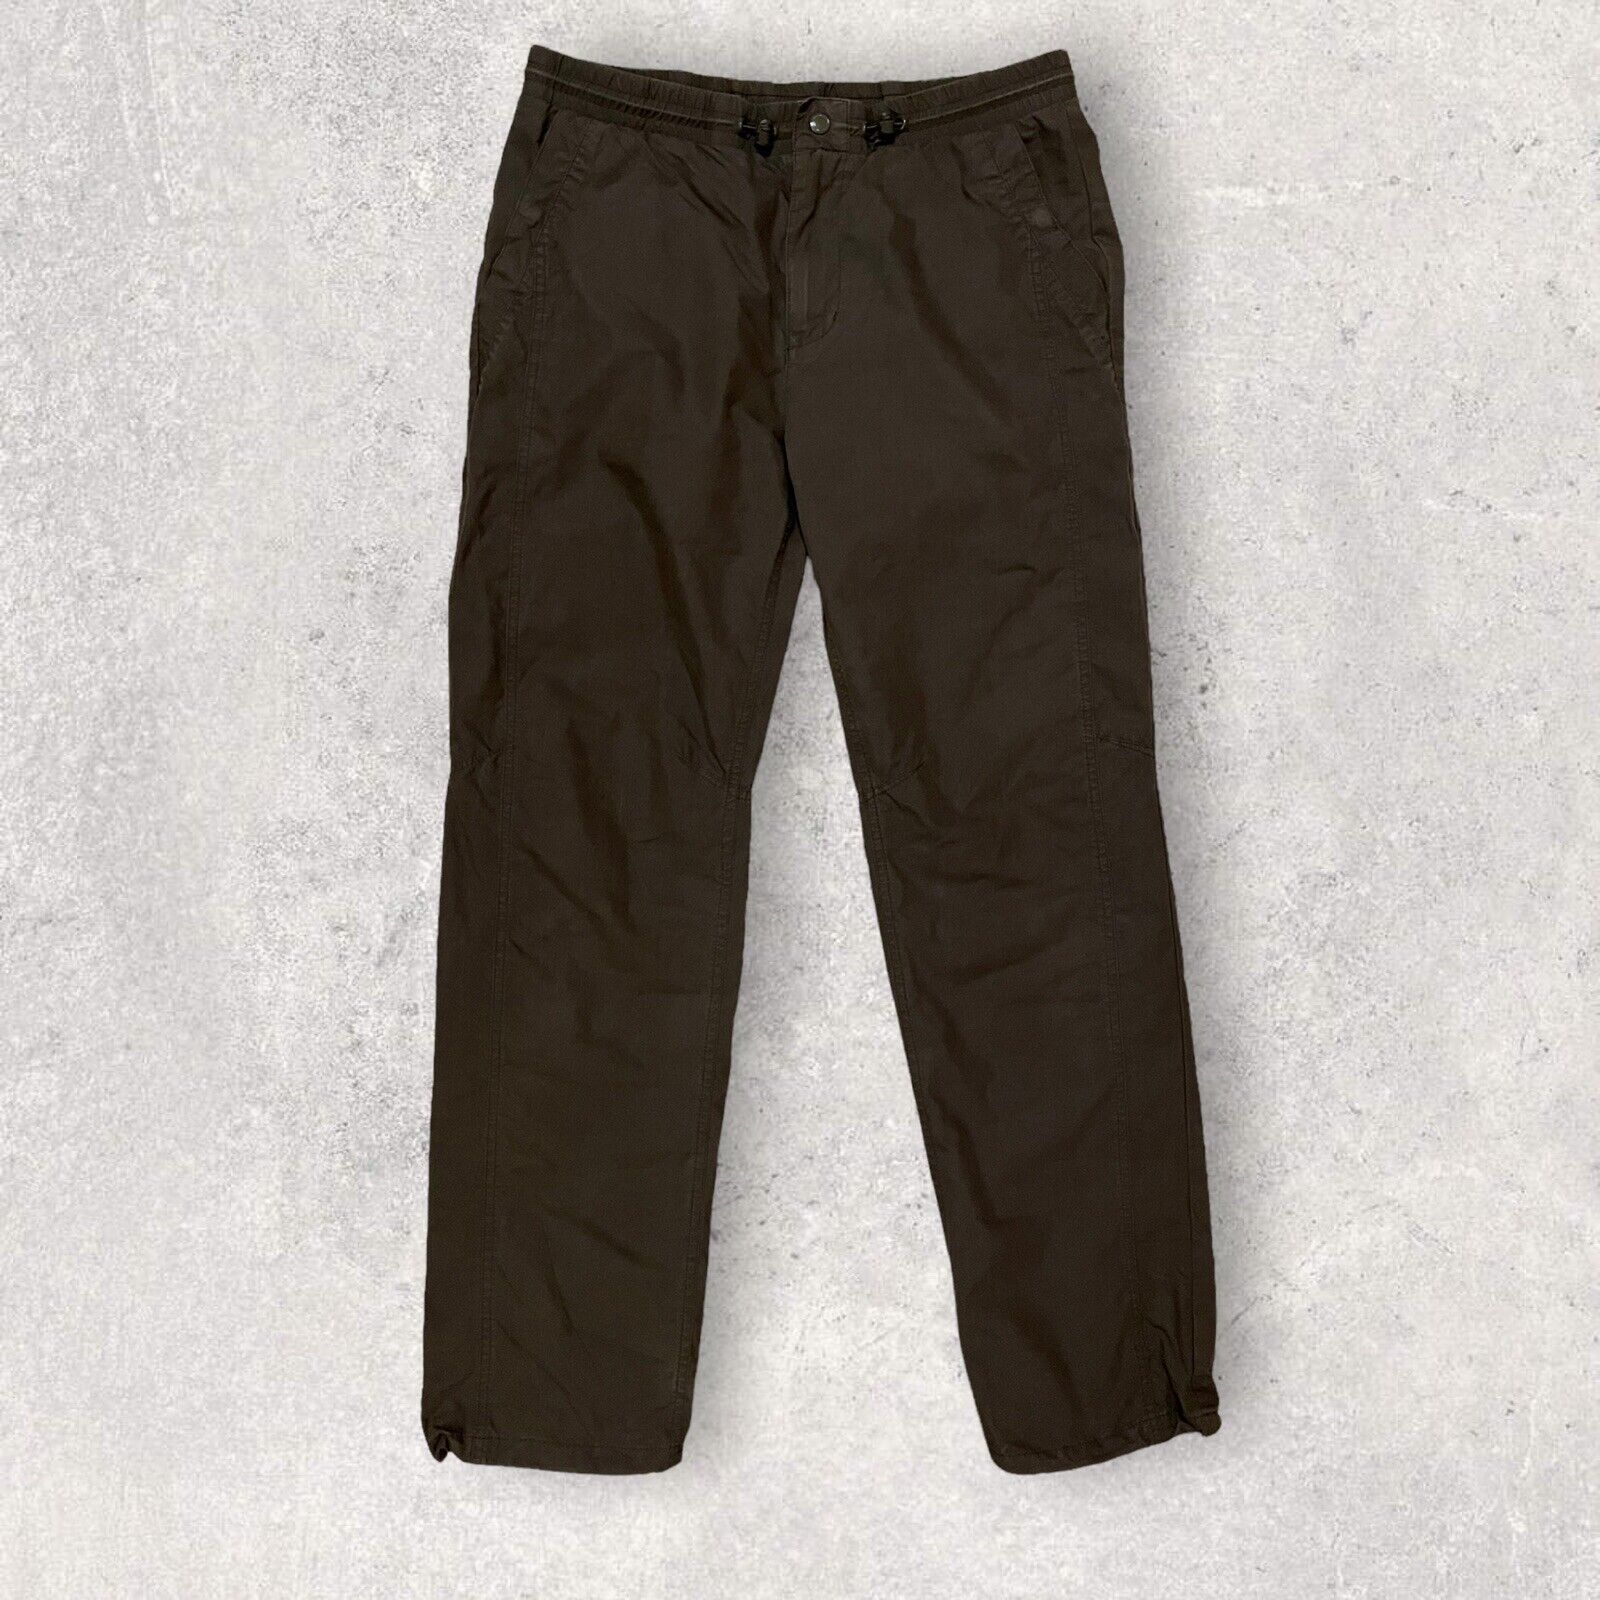 Armani Exchange Military Pants Cargo sz 30 Dark Khaki Green Made in China |  eBay